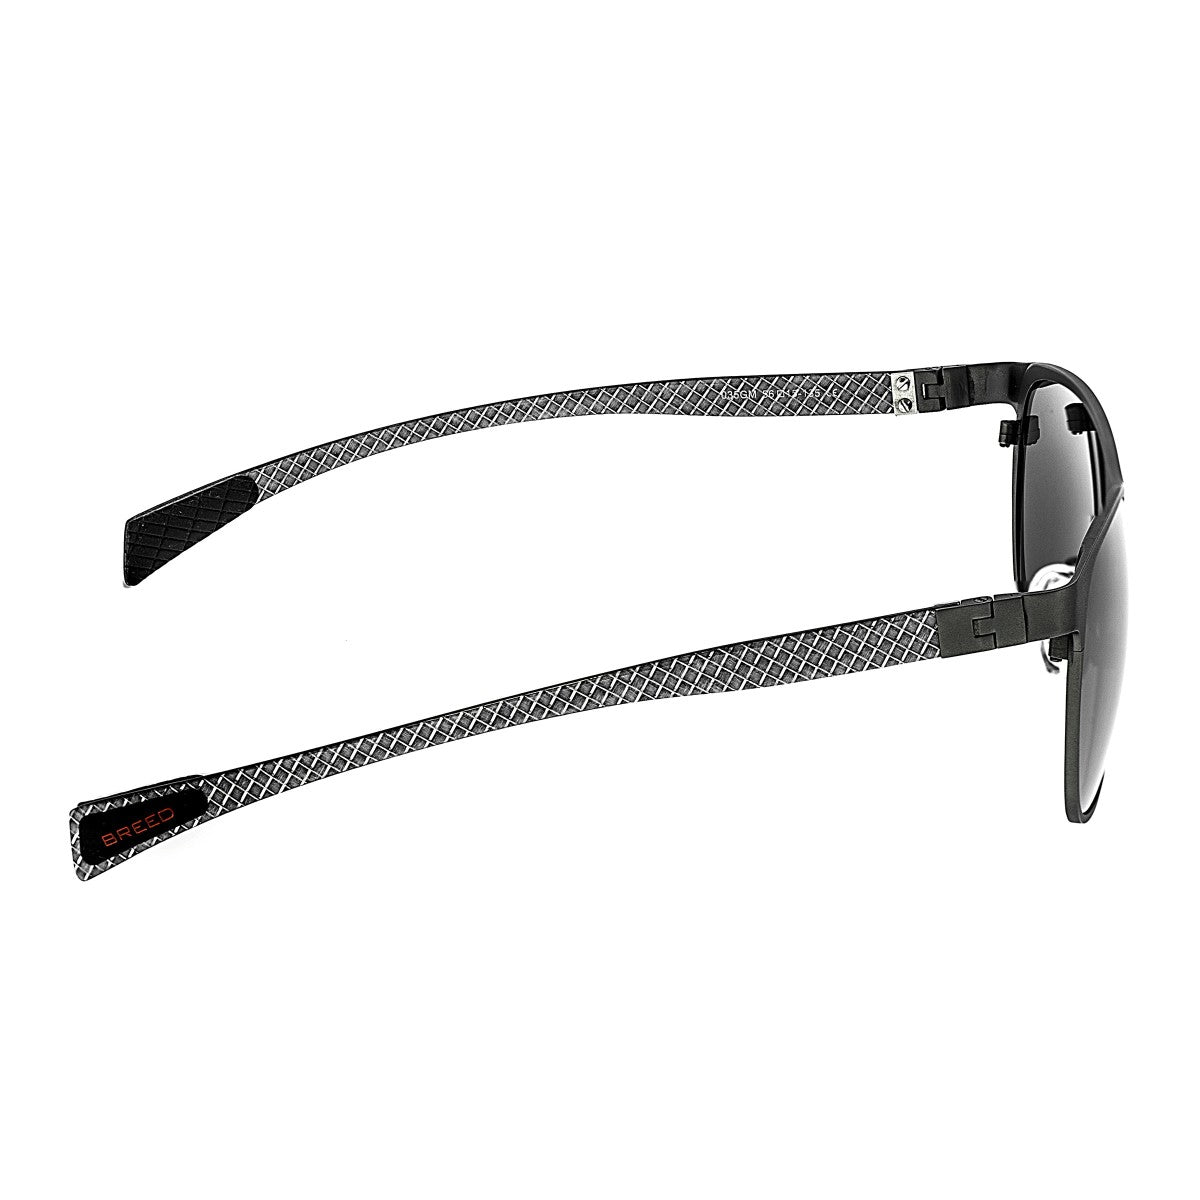 Breed Templar Titanium Polarized Sunglasses - Gunmetal/Black - BSG035GM